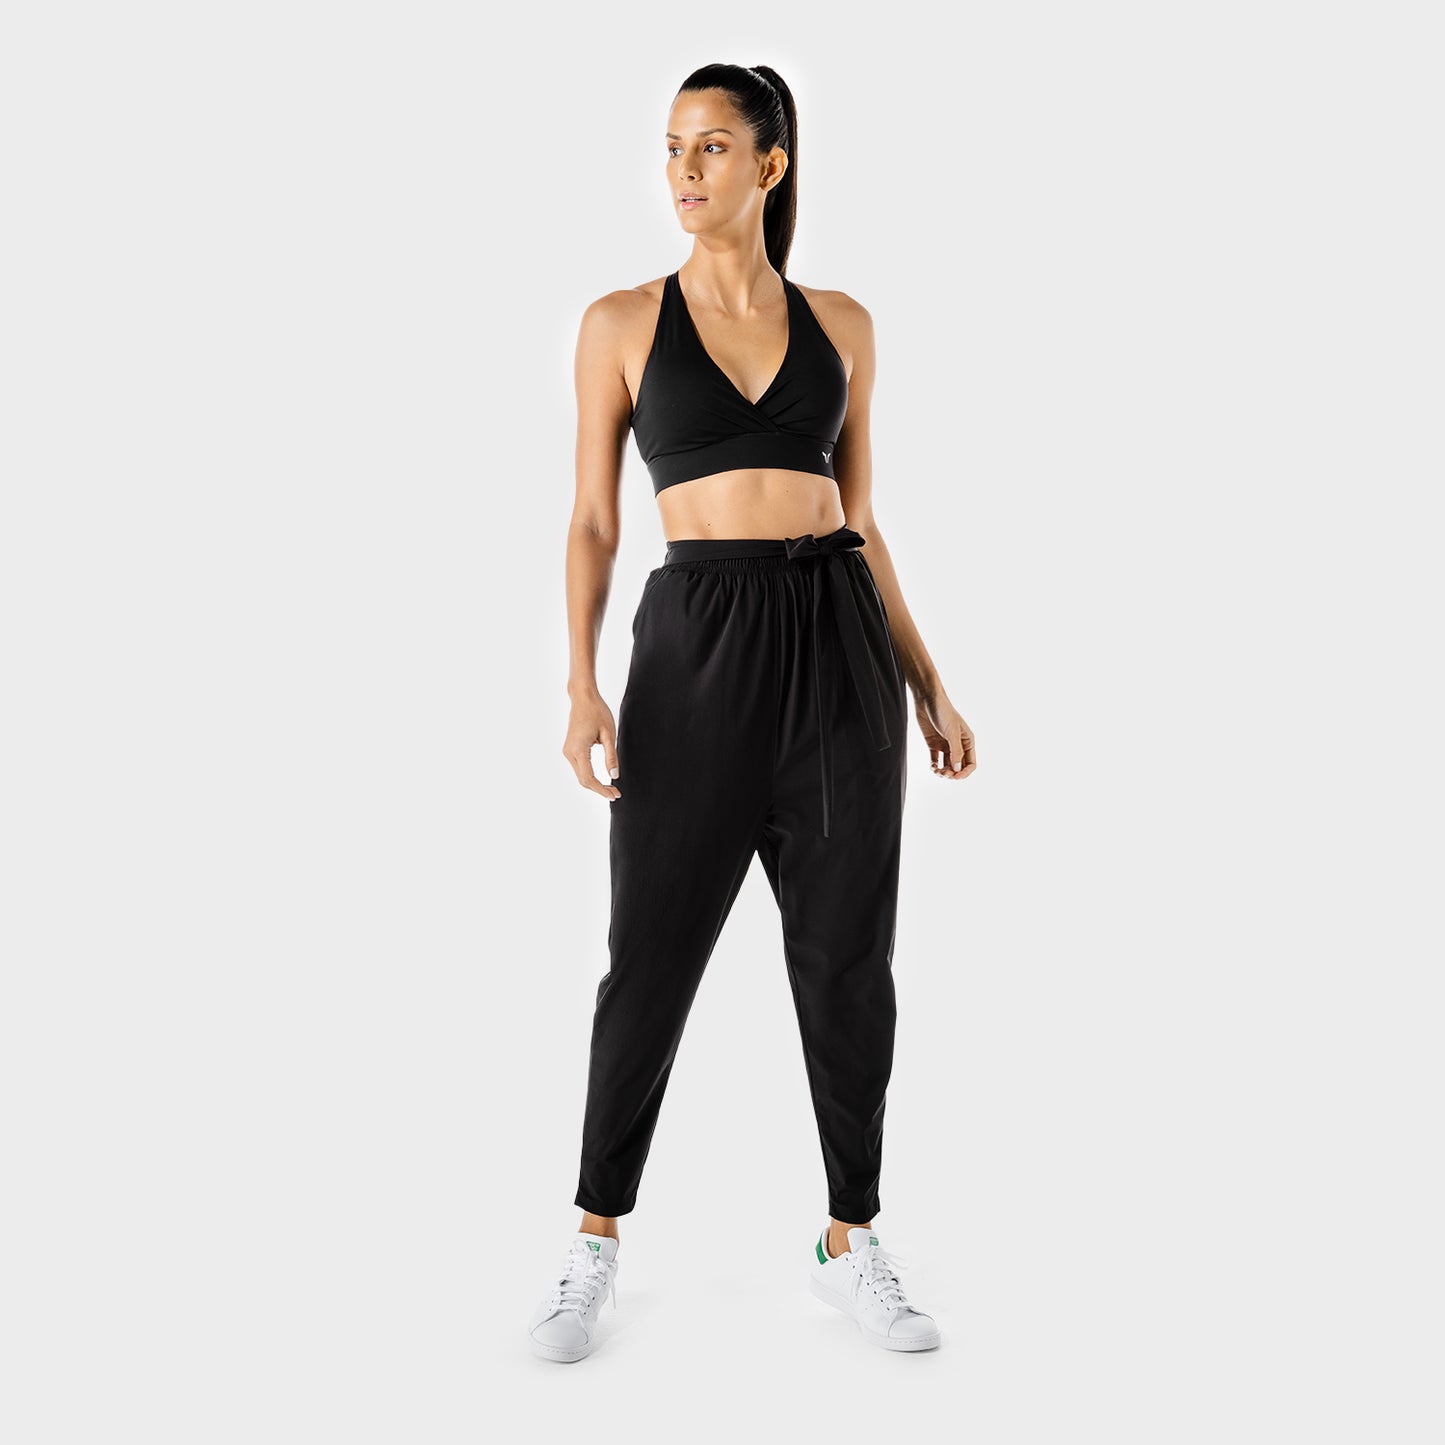 squatwolf-gym-wear-womens-fitness-wide-leg-pants-black-workout-pants